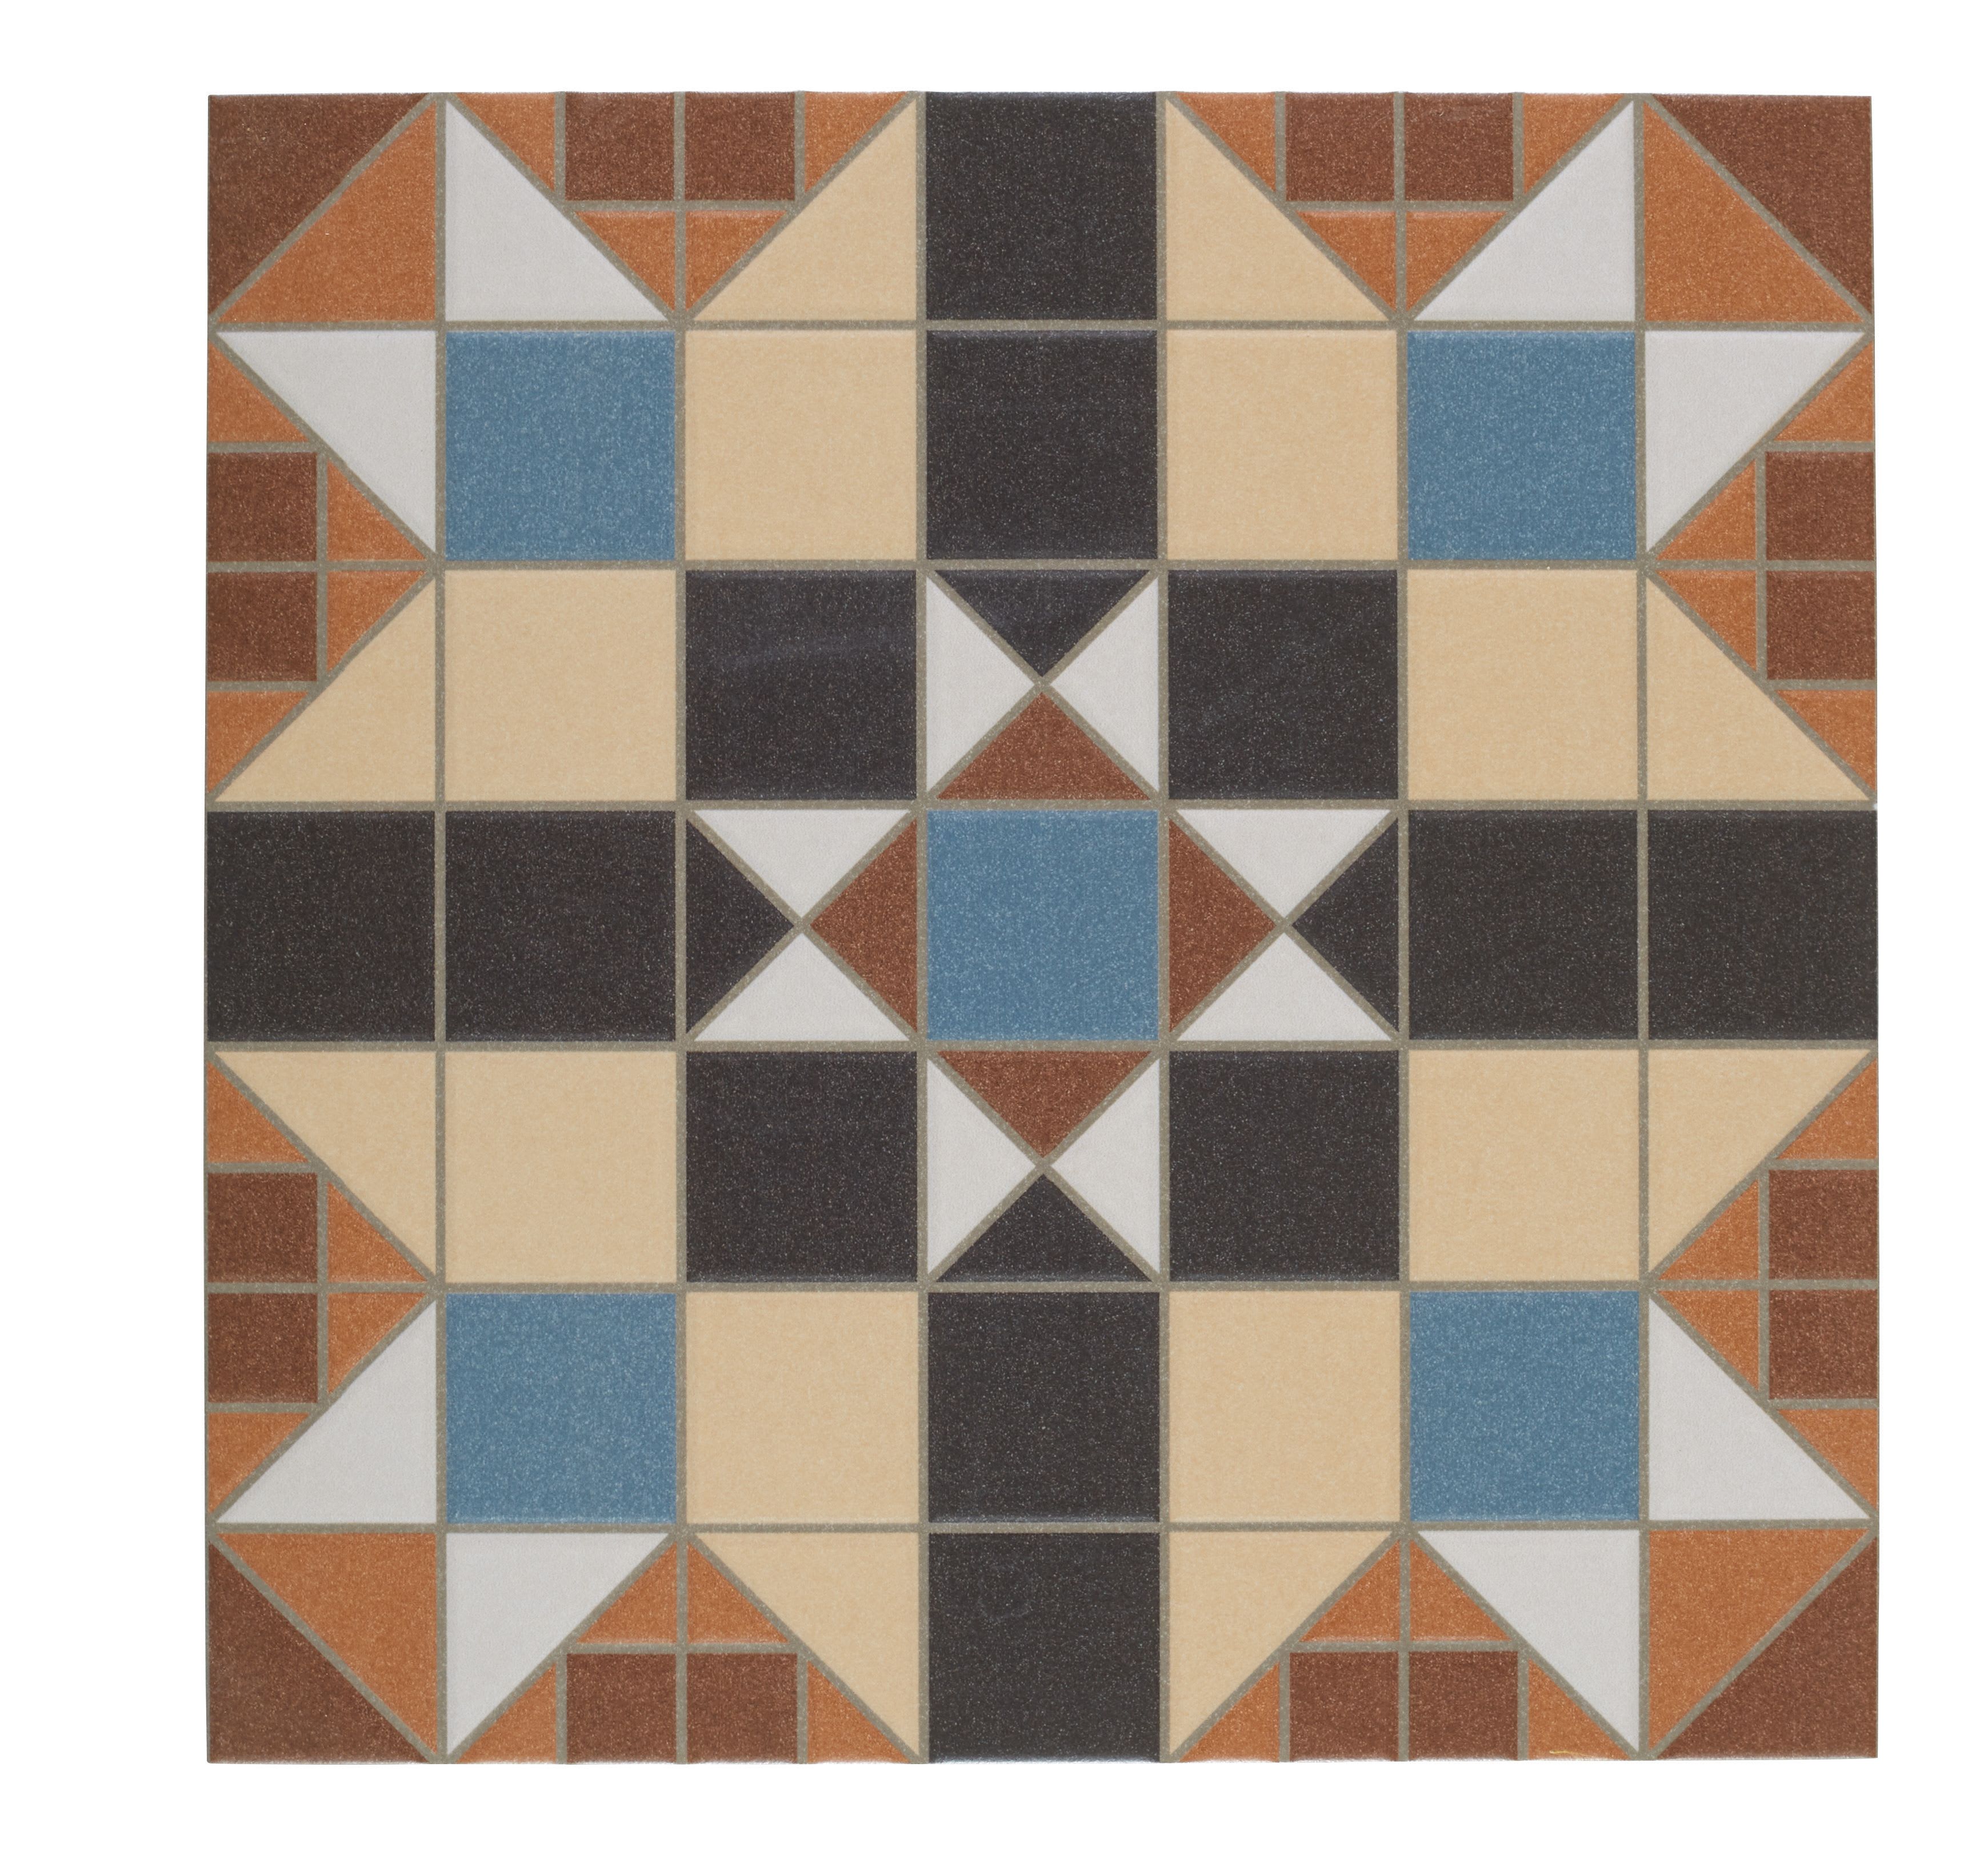 Wickes Dorset Marron Patterned Ceramic Tile 316 x